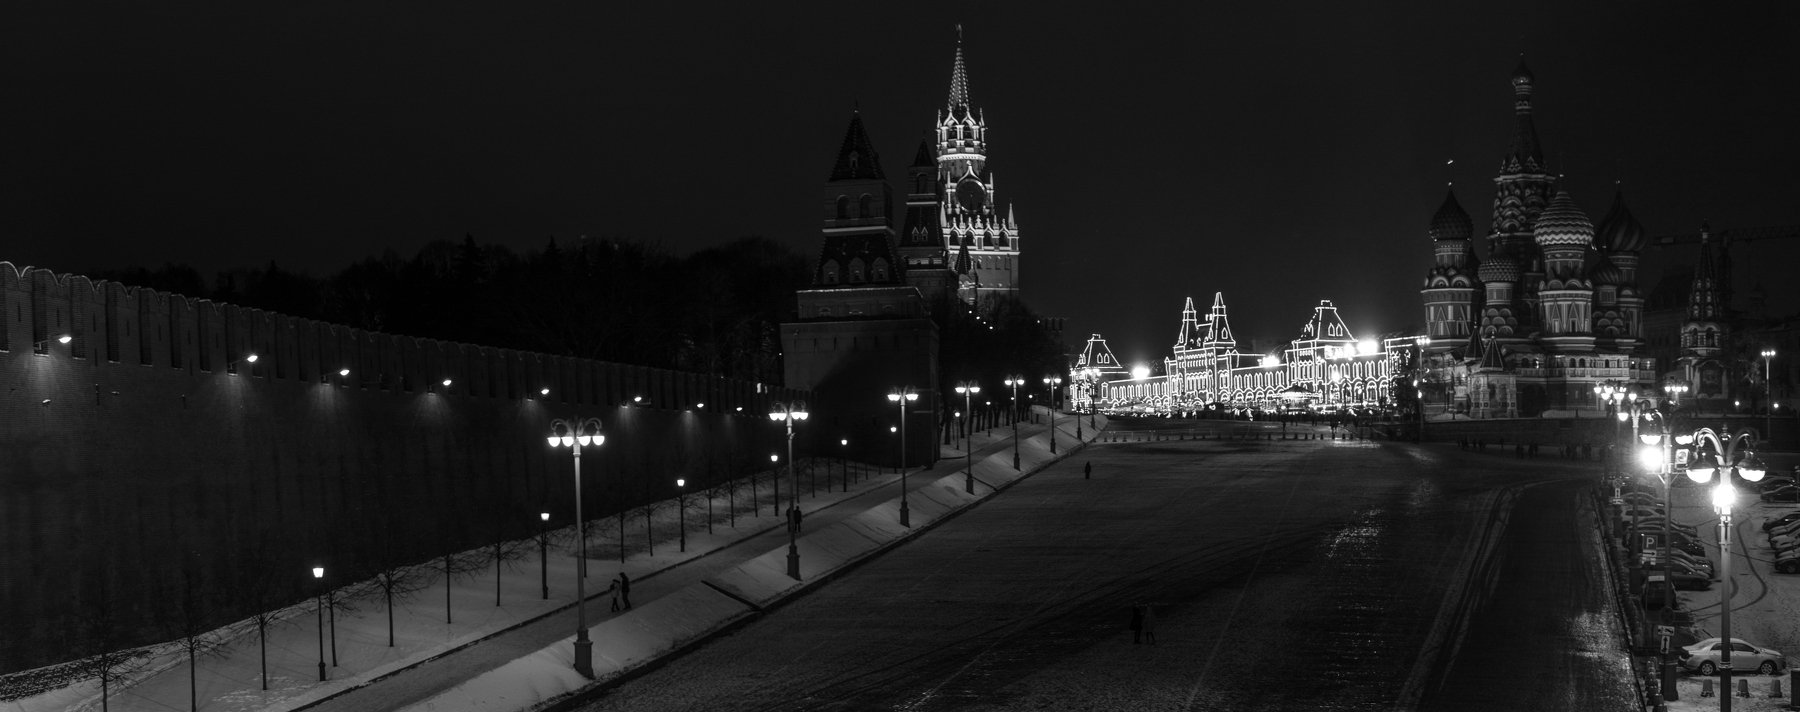 москва панорама кремль, Цукерман Михаил